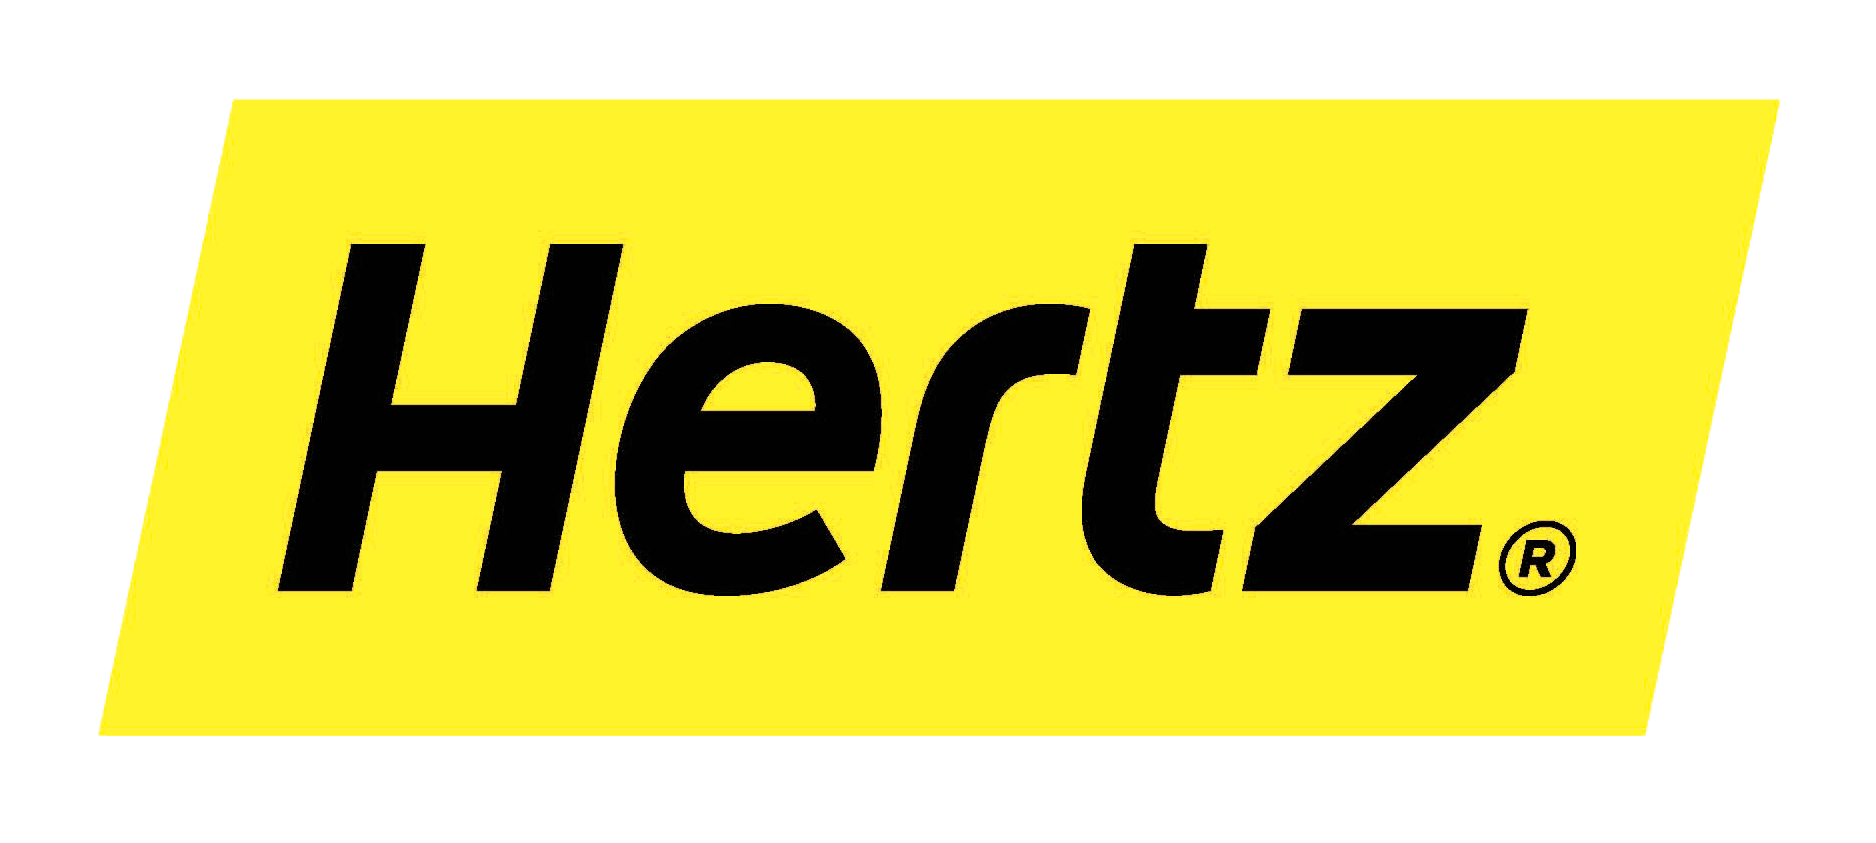 Text Car Yellow Hertz Renting PNG